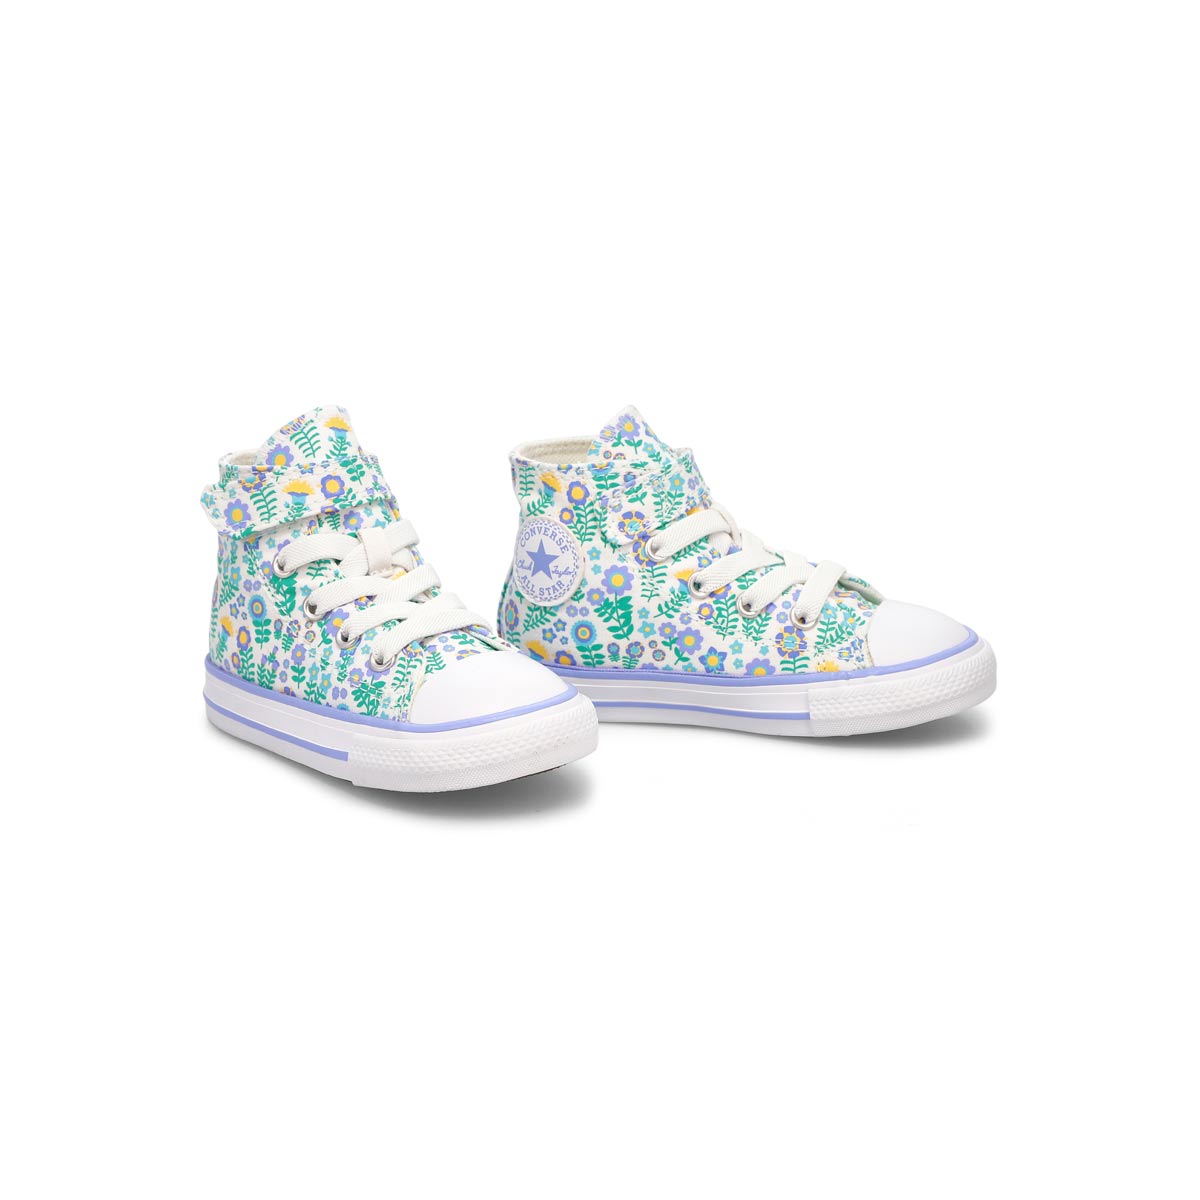 Infants' Chuck Taylor All Star IV Floral sneaker